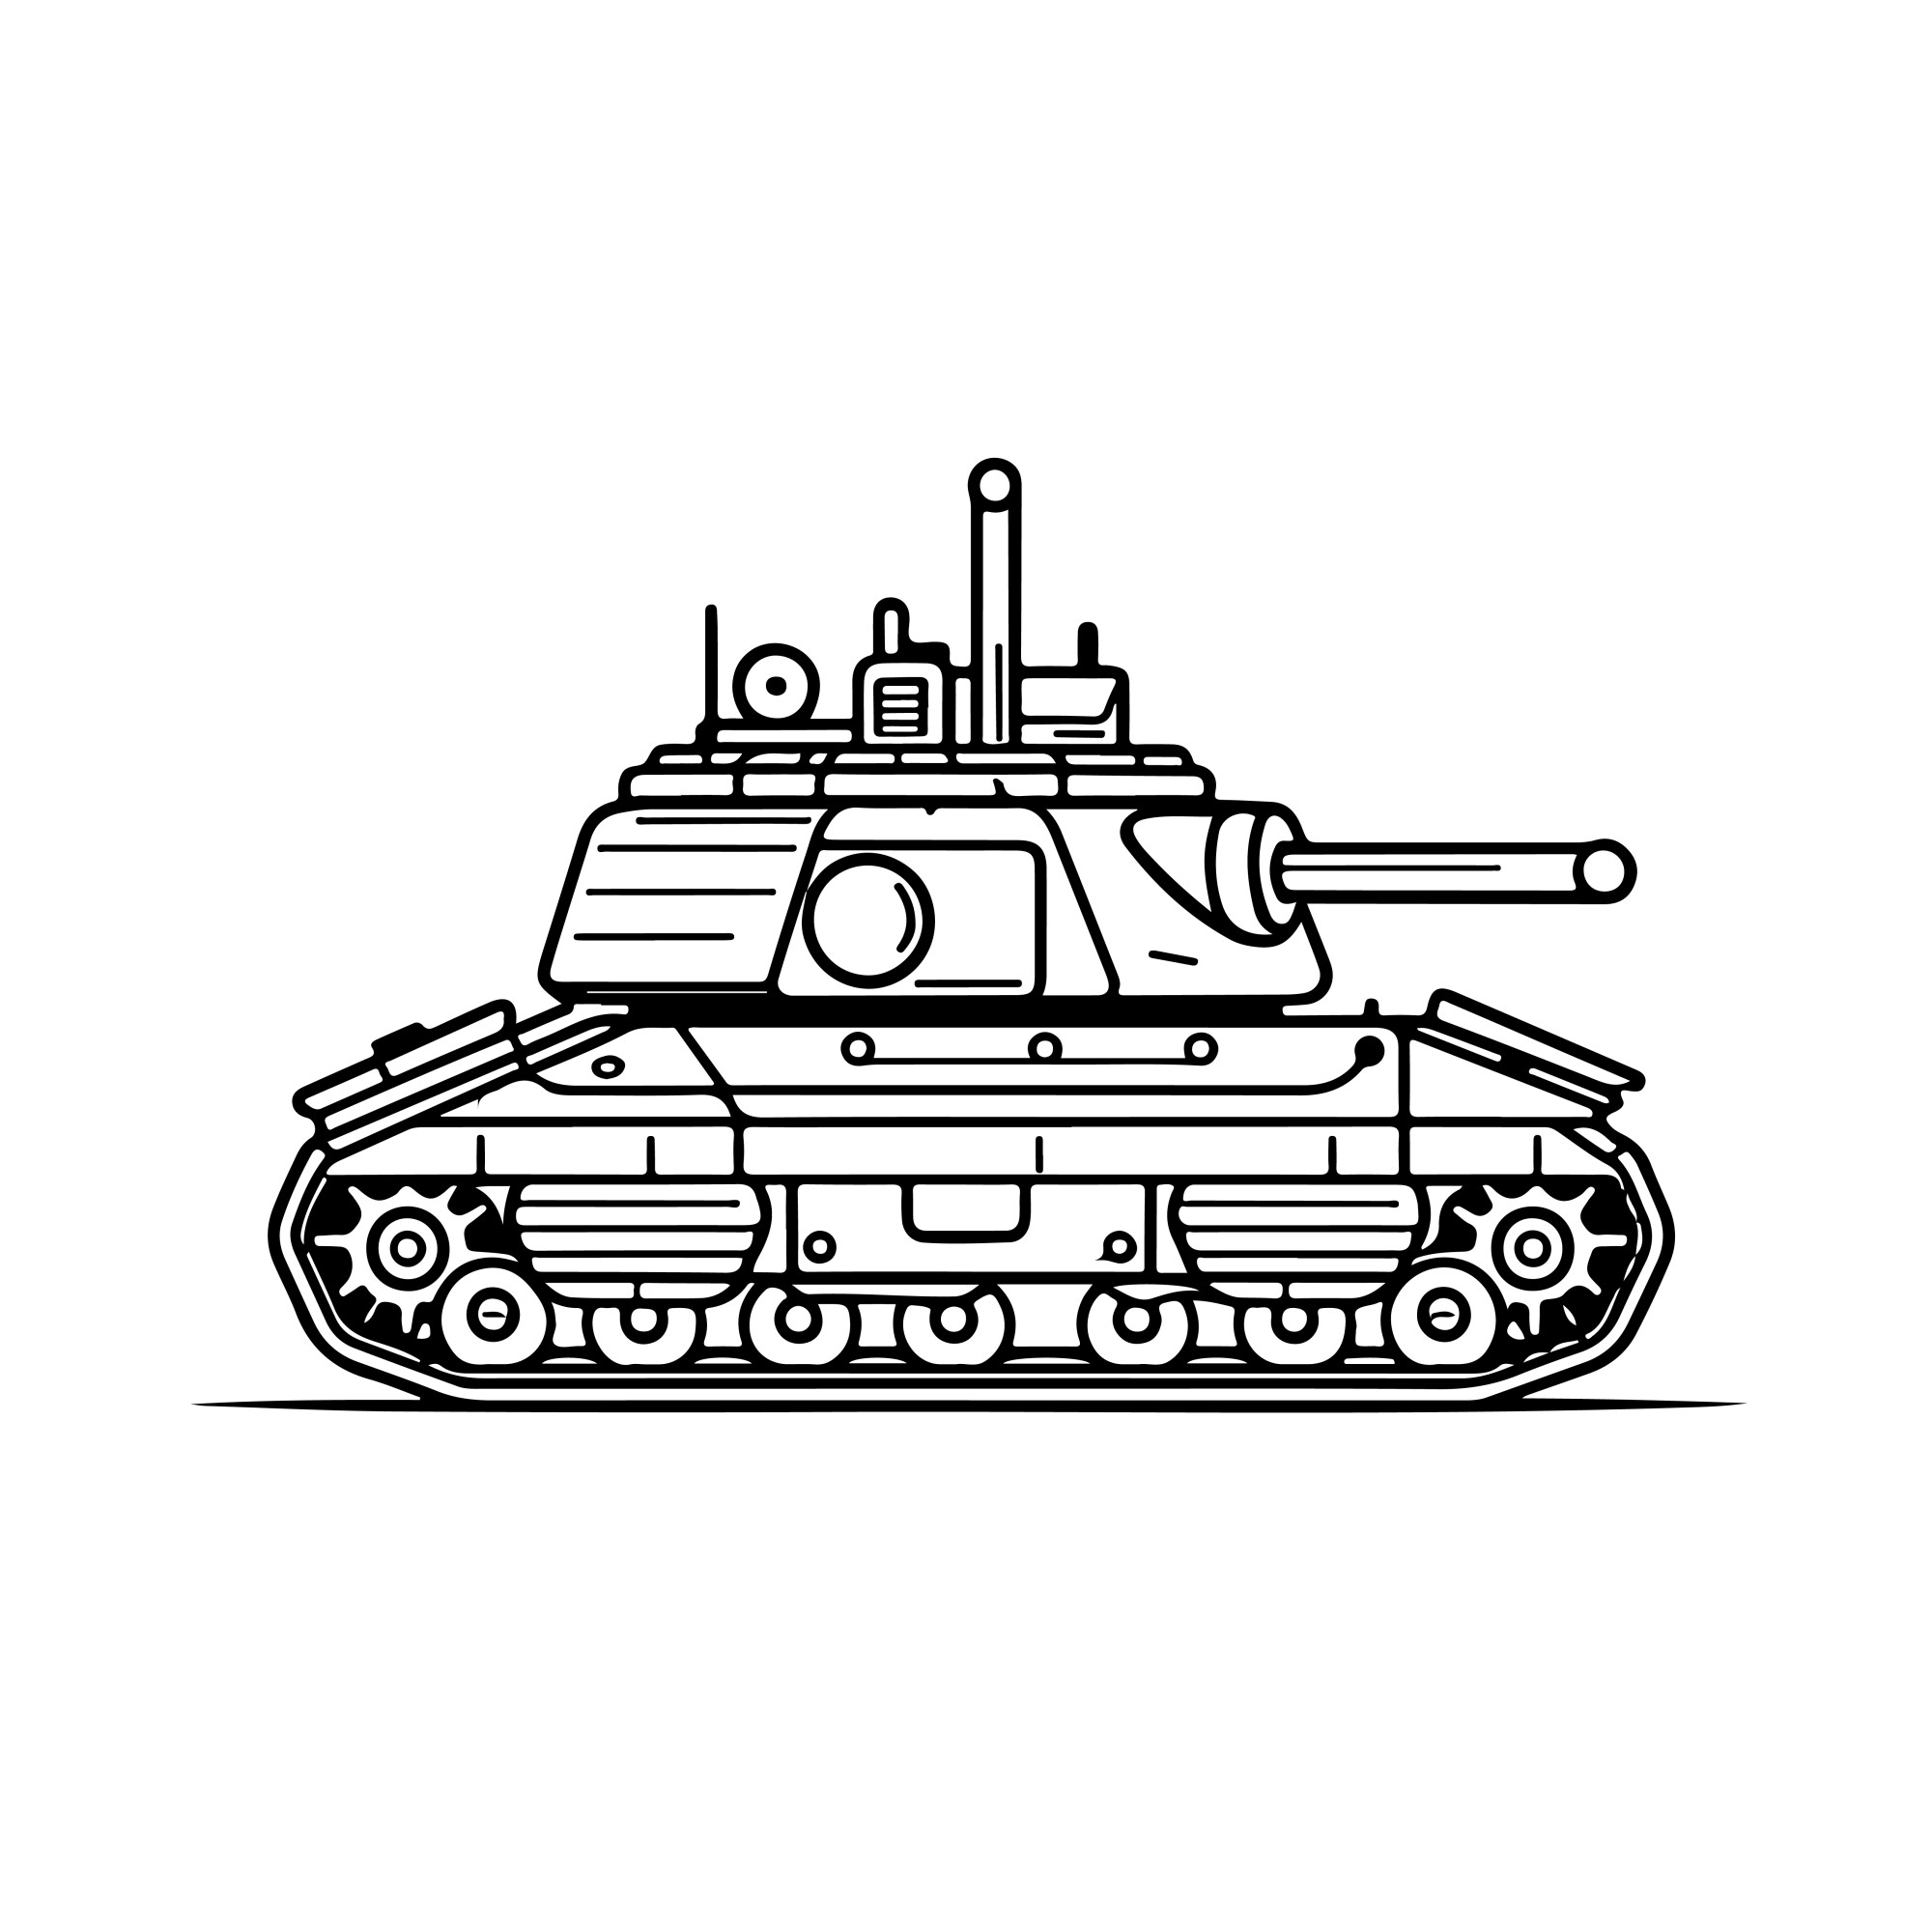 Раскраска для детей: танк левиафан